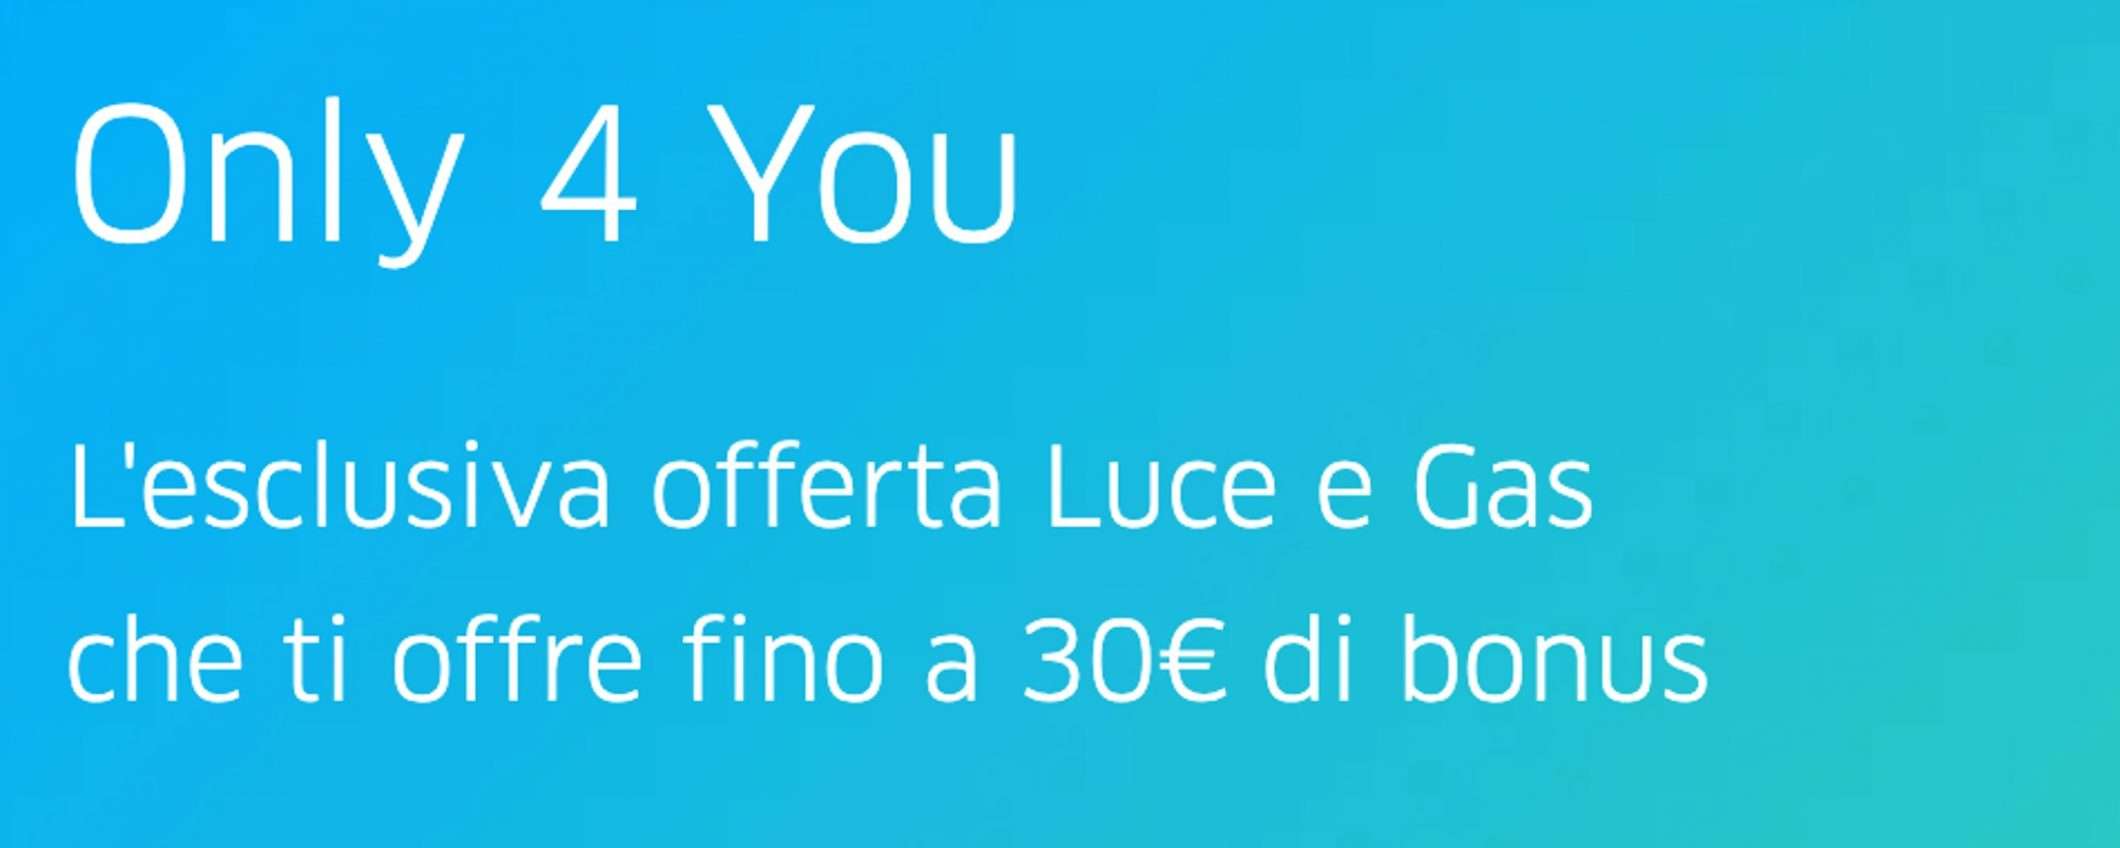 Engie: 30€ di BONUS con Offerta Only 4 You!